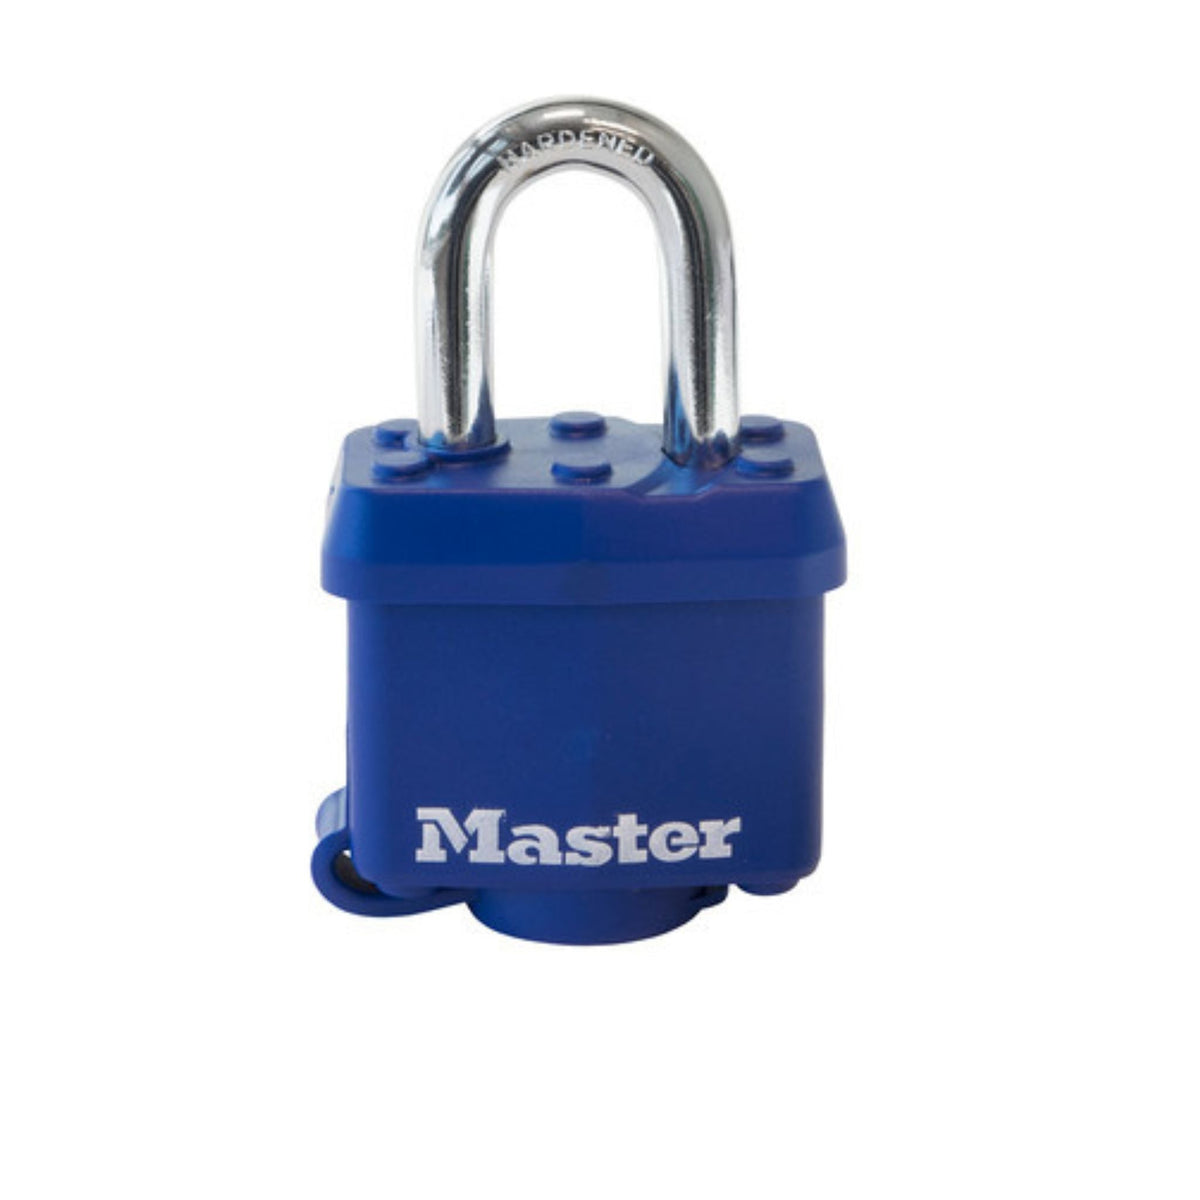 Master Lock 312KA 3606 Lock Laminated steel No. 312 Series Padlock Keyed to Match Existing Key Number KA3606 - The Lock Source